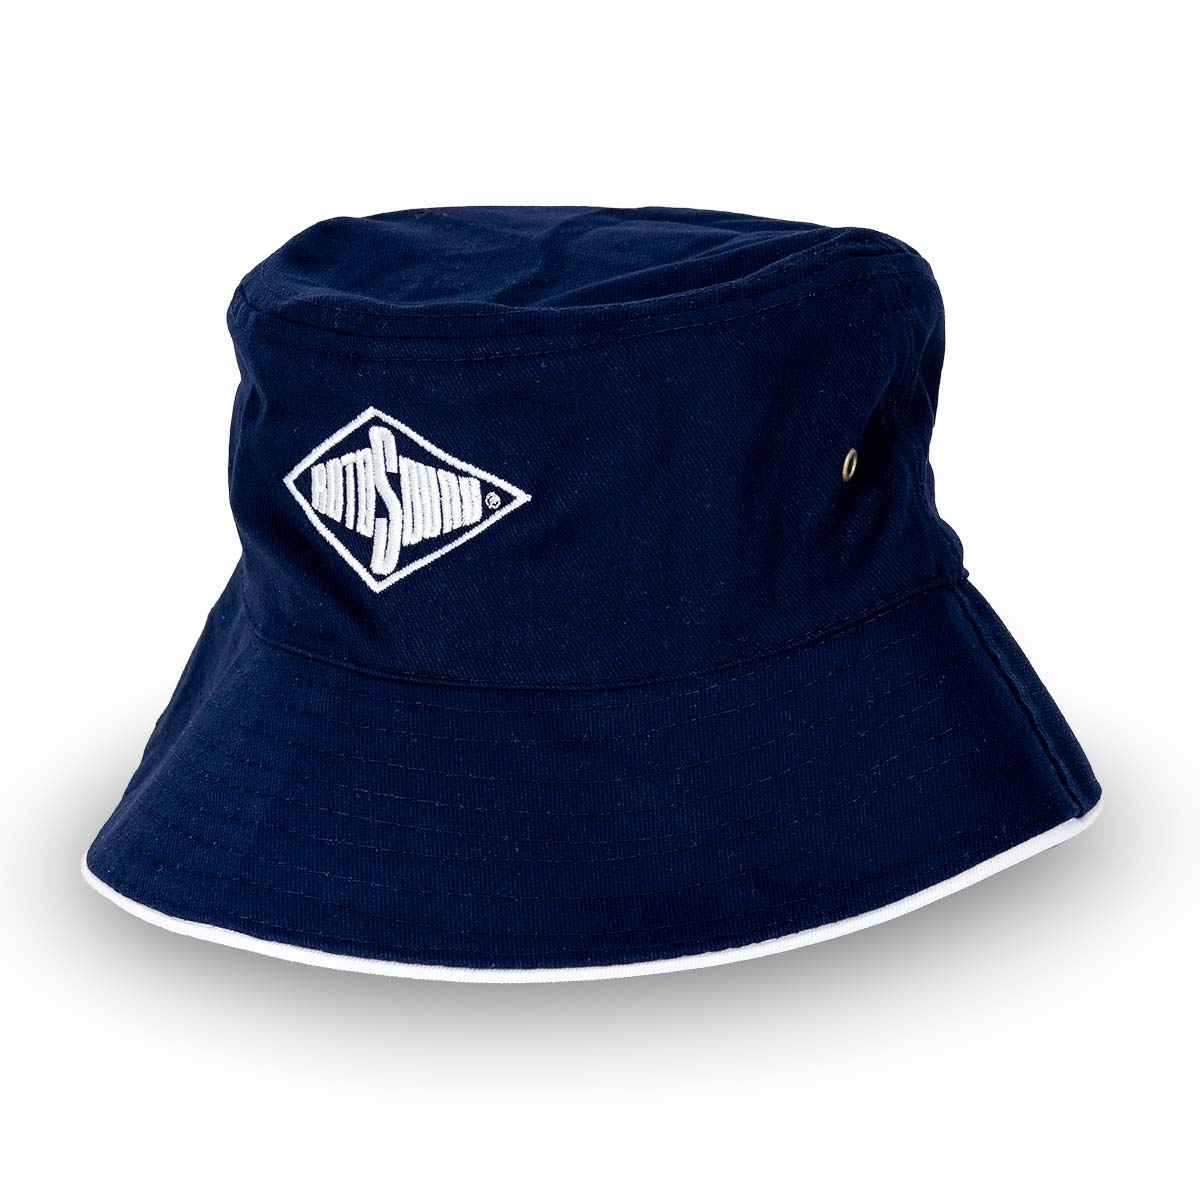 https://www.rotosound.com/wp-content/uploads/2021/08/Navy-blue-bucket-hat-front.jpg